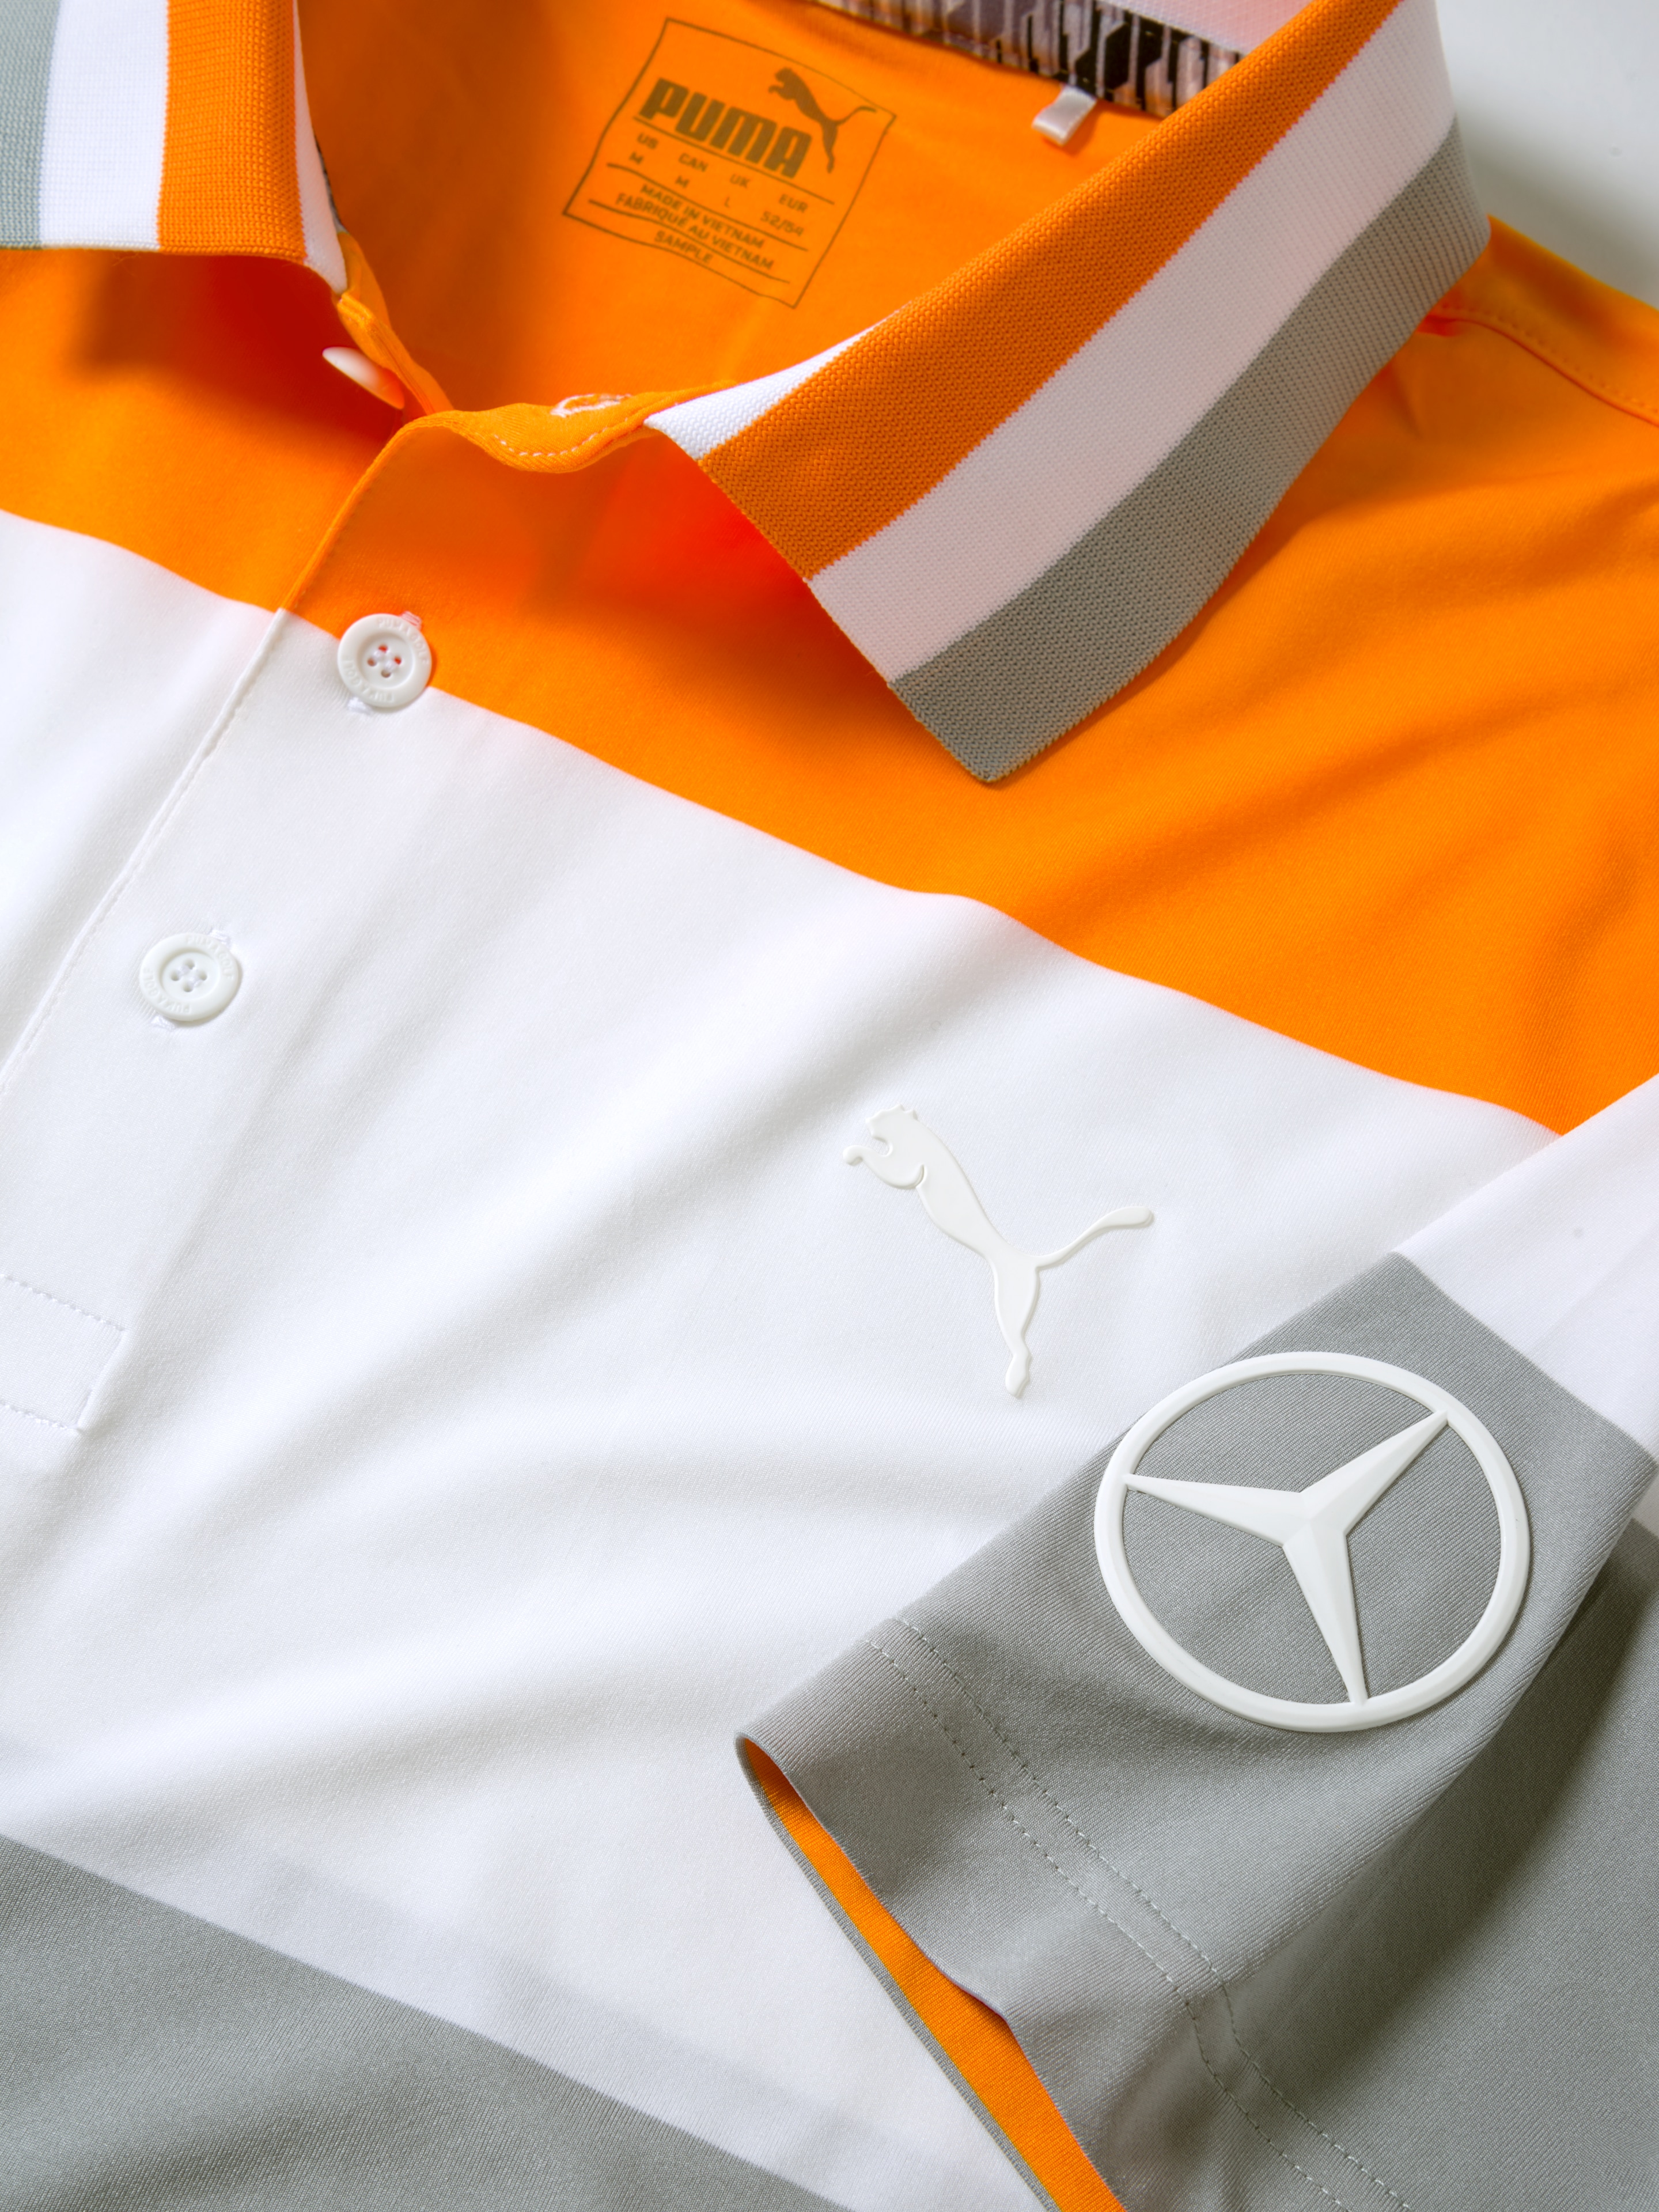 Golf-Poloshirt Herren - orange/grau/weiß, XXL